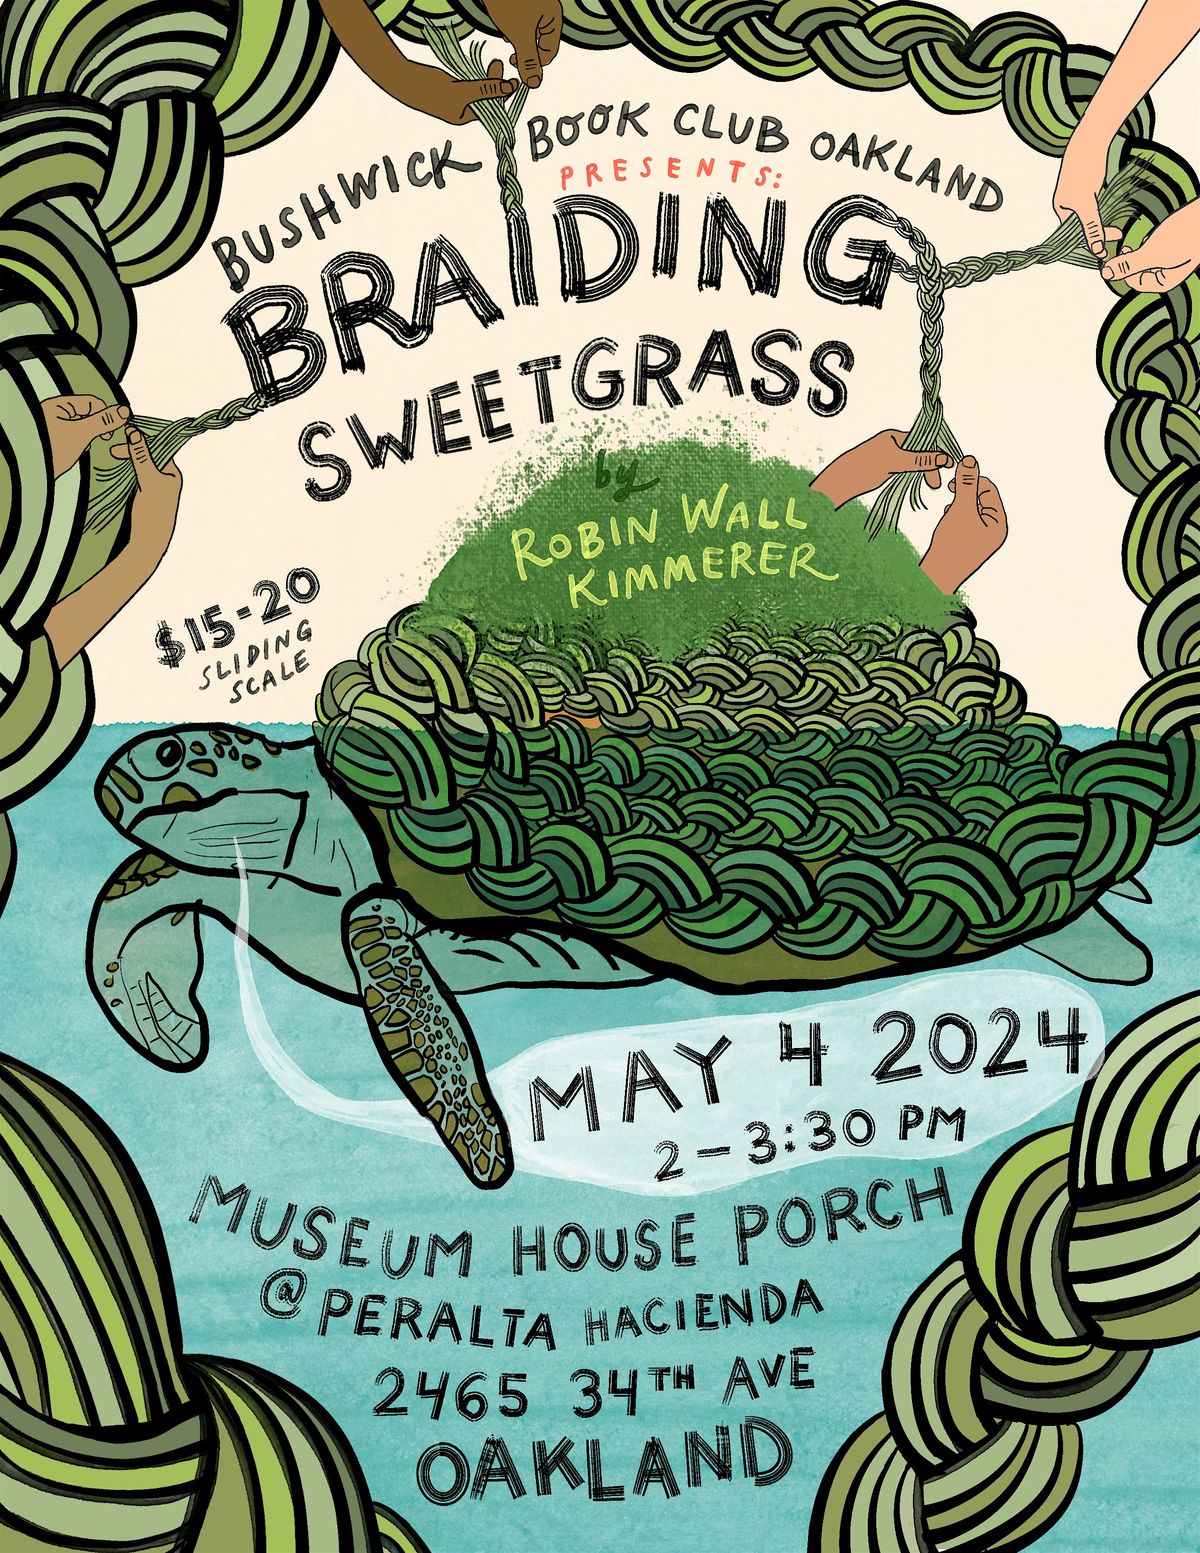 Bushwick Book Club Oakland presents: Braiding Sweetgrass by Robin Wall Kimmerer